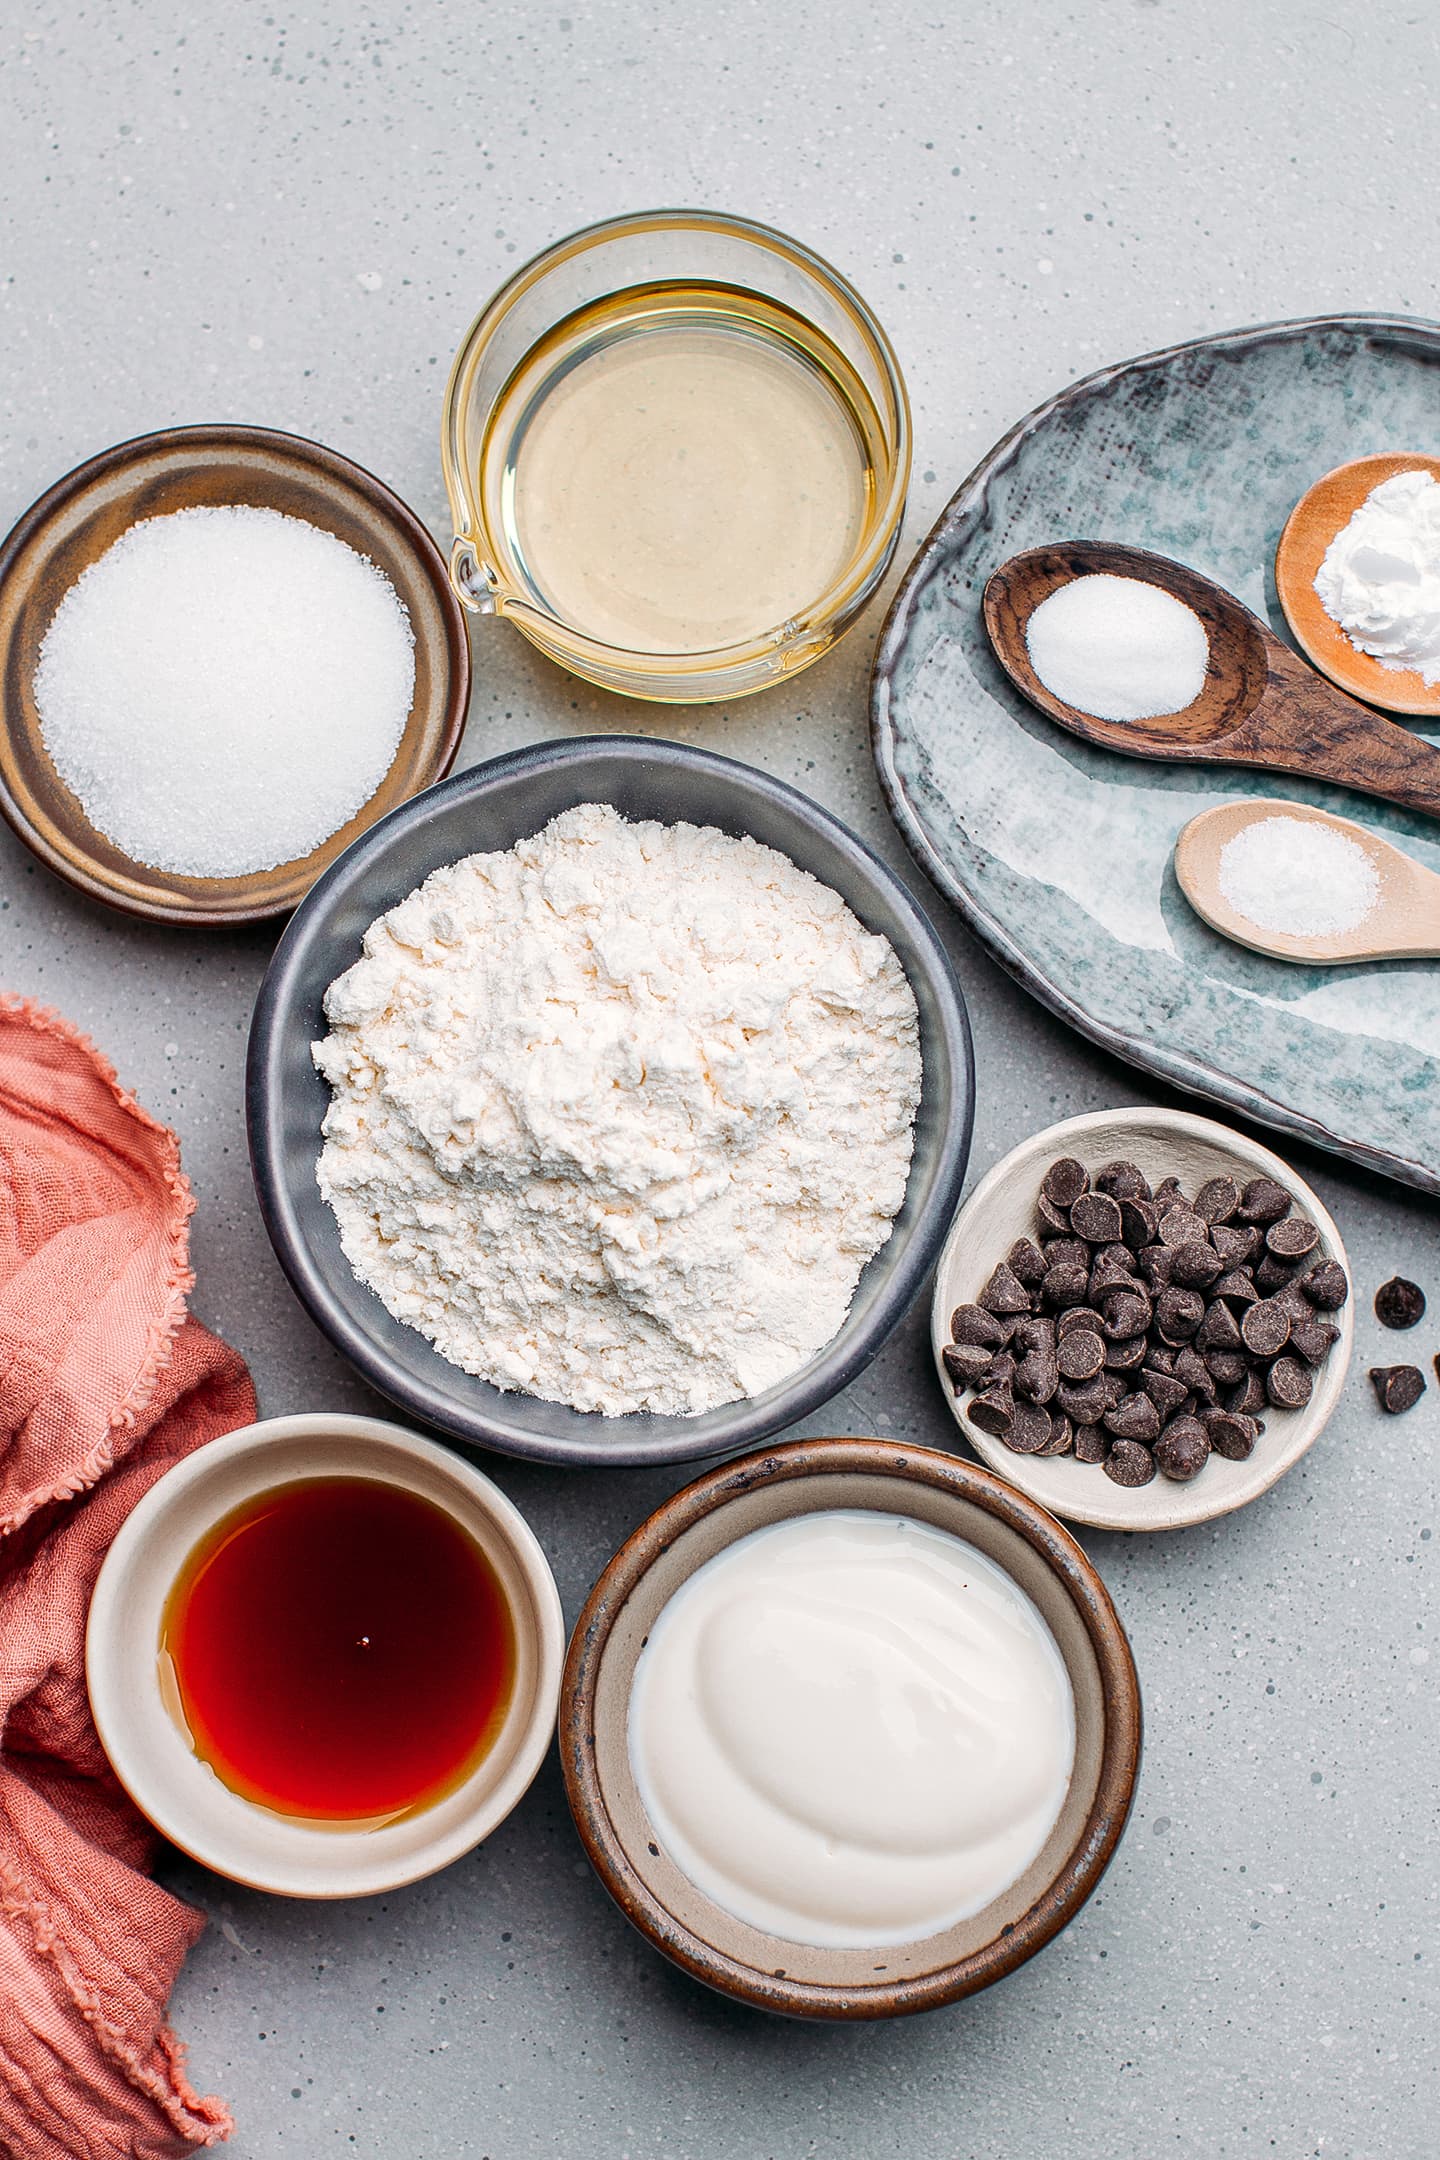 Ingredients like flour, sugar, yogurt, baking powder, vanilla extract, and chocolate chips.